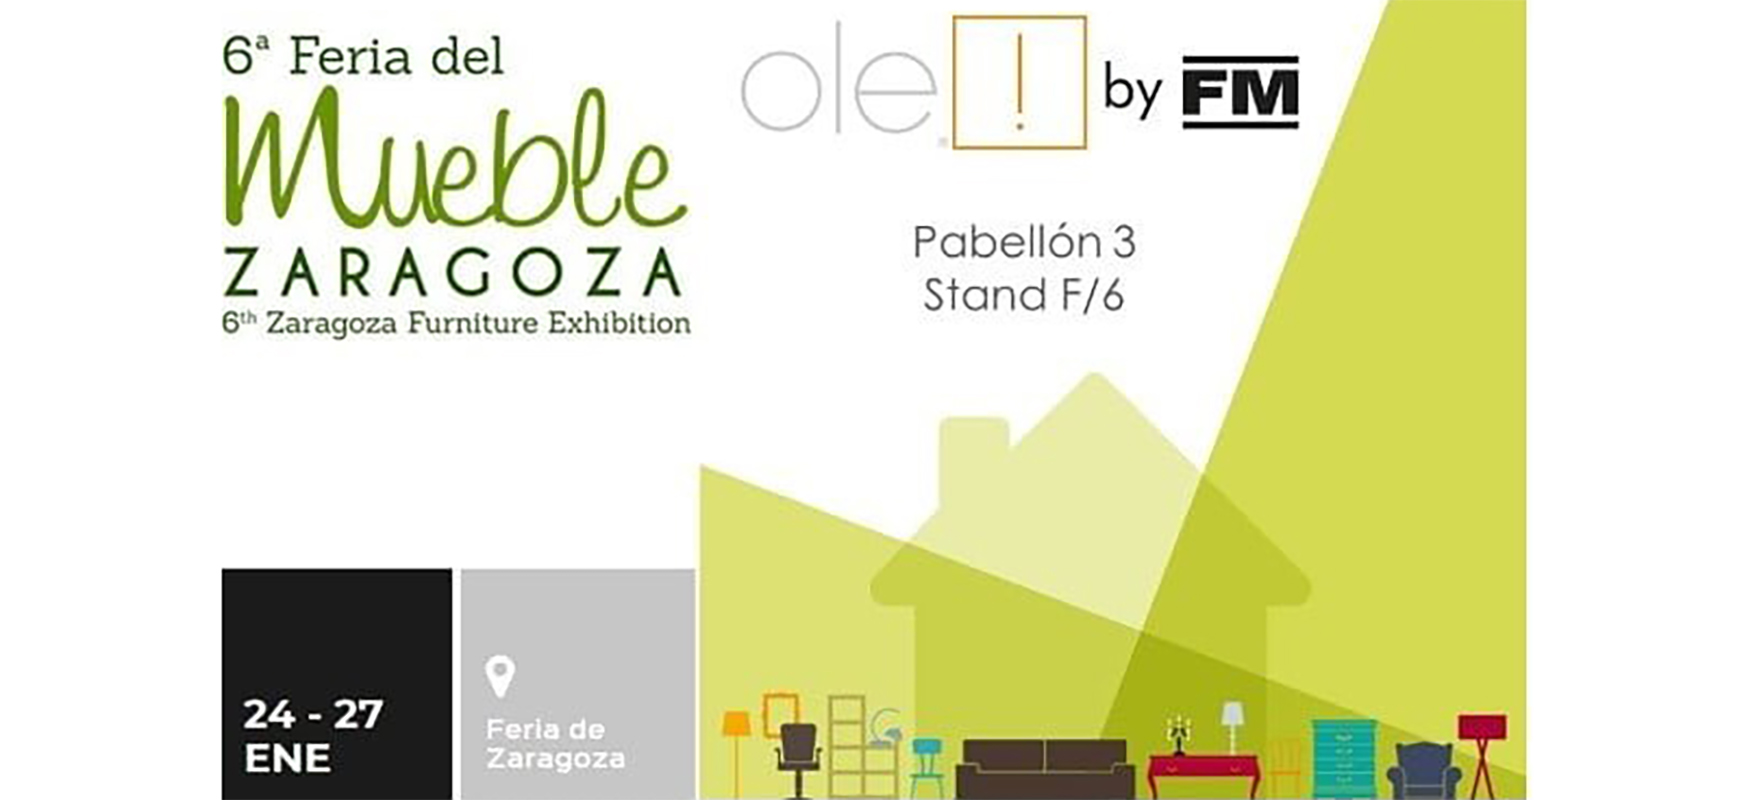 See you at the Furniture Fair in Zaragoza